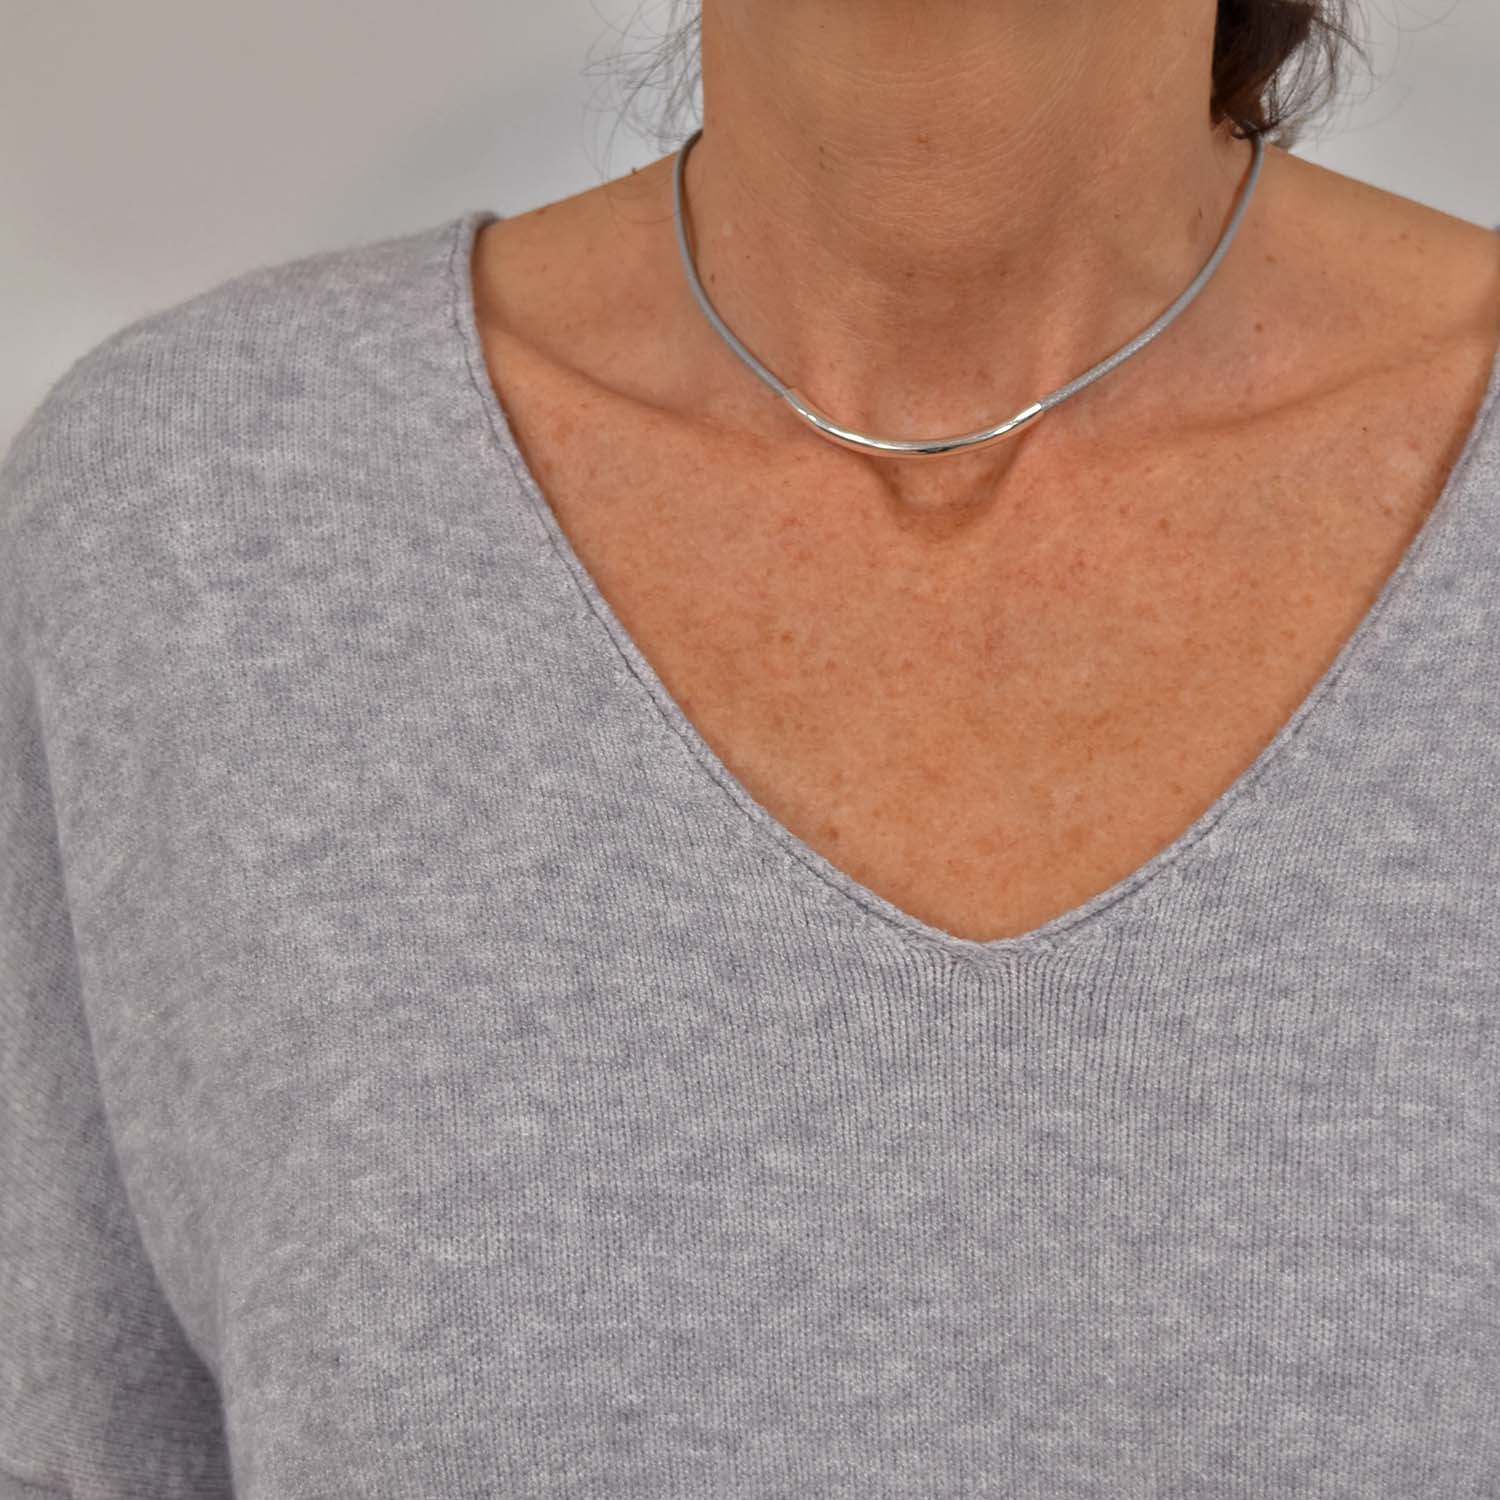 Waxed grey tube necklace
